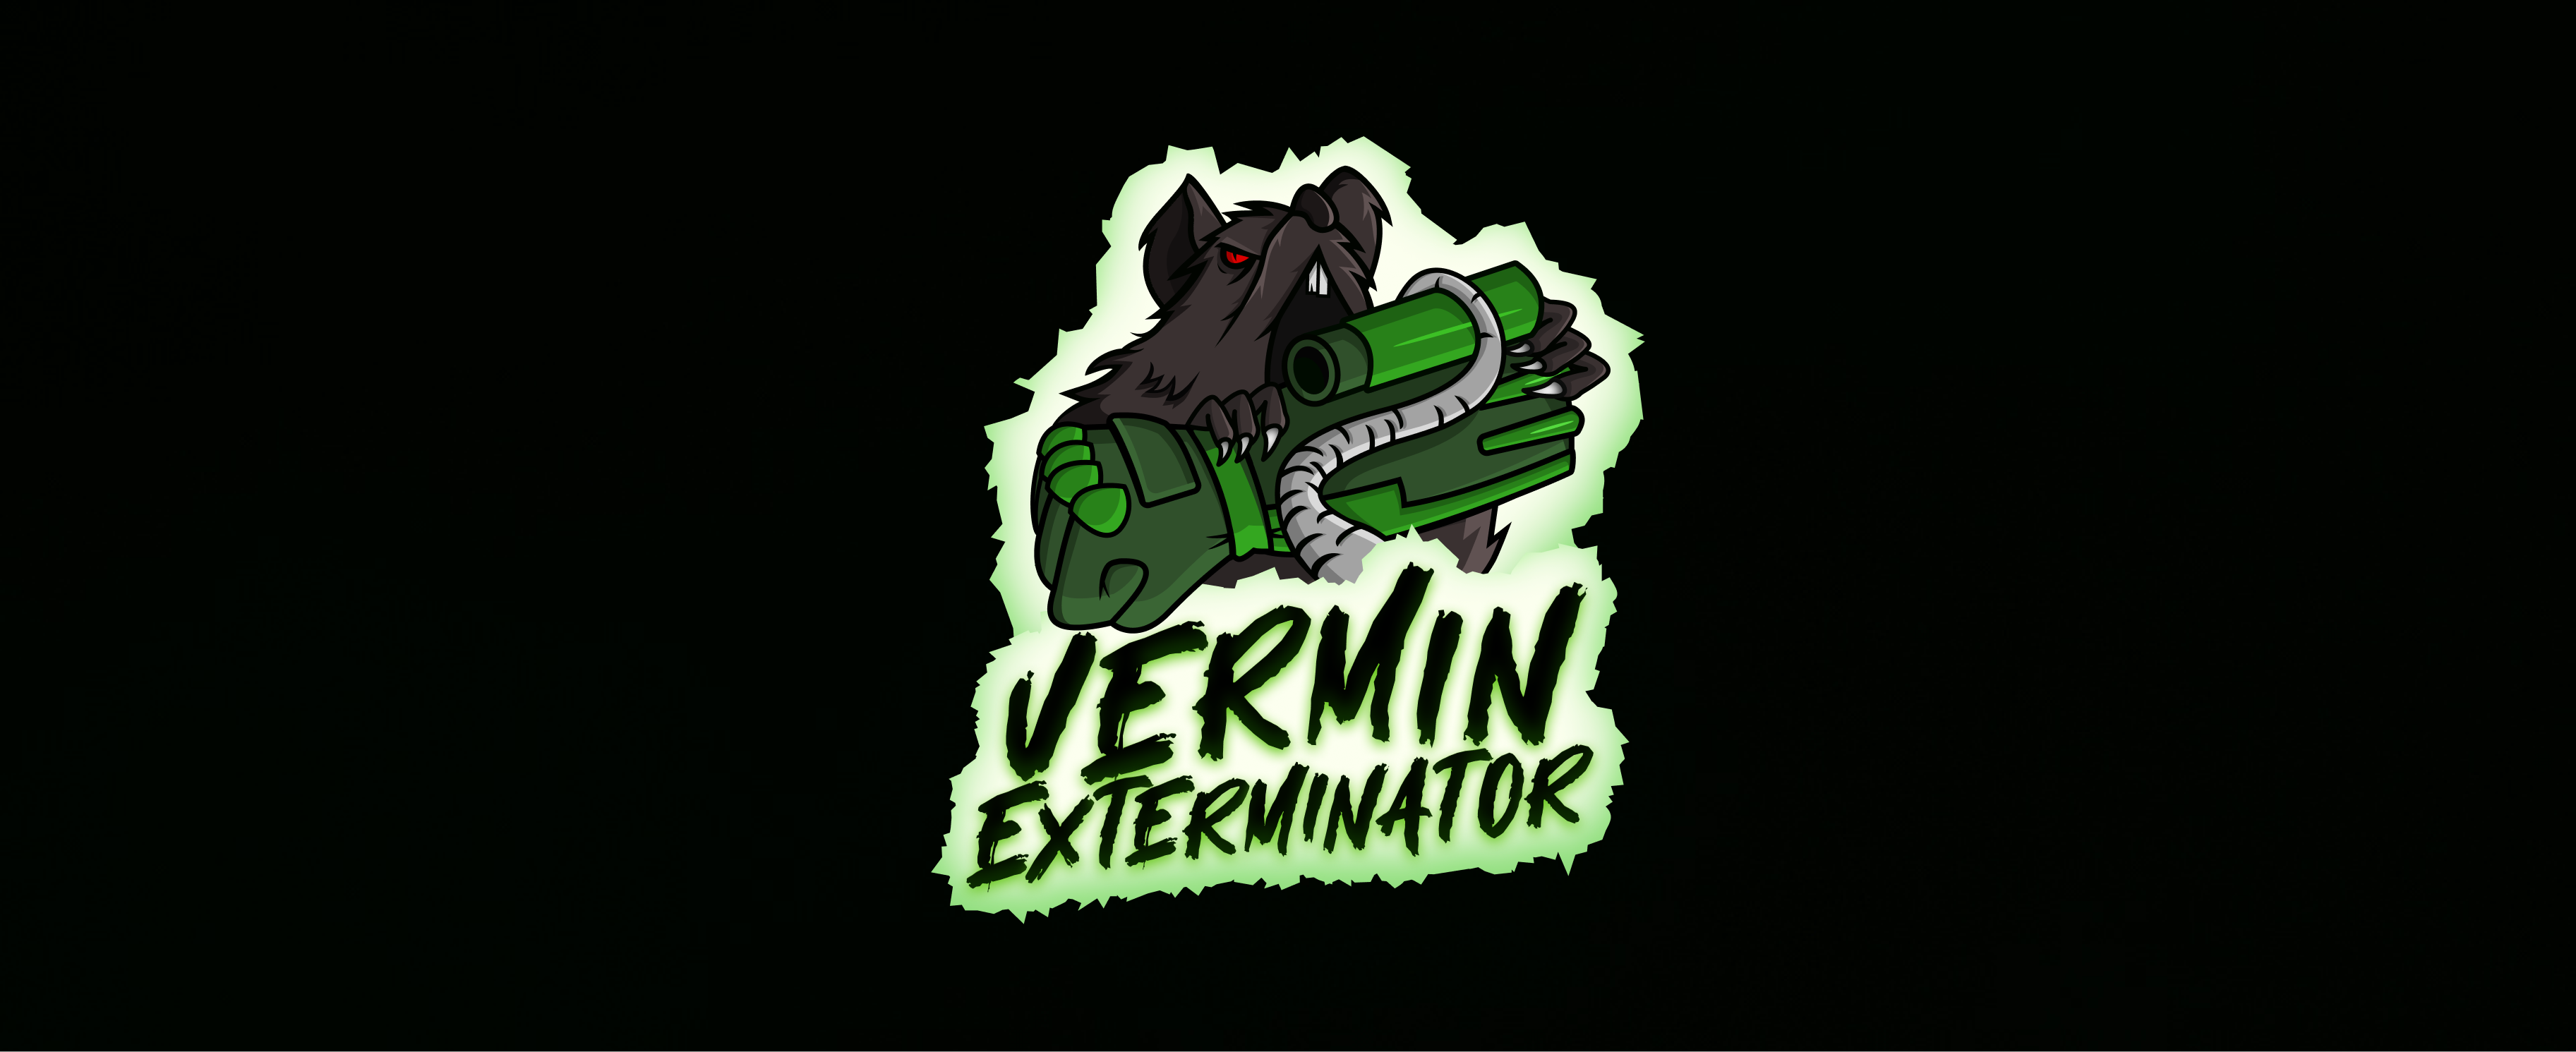 Vermin Exterminator